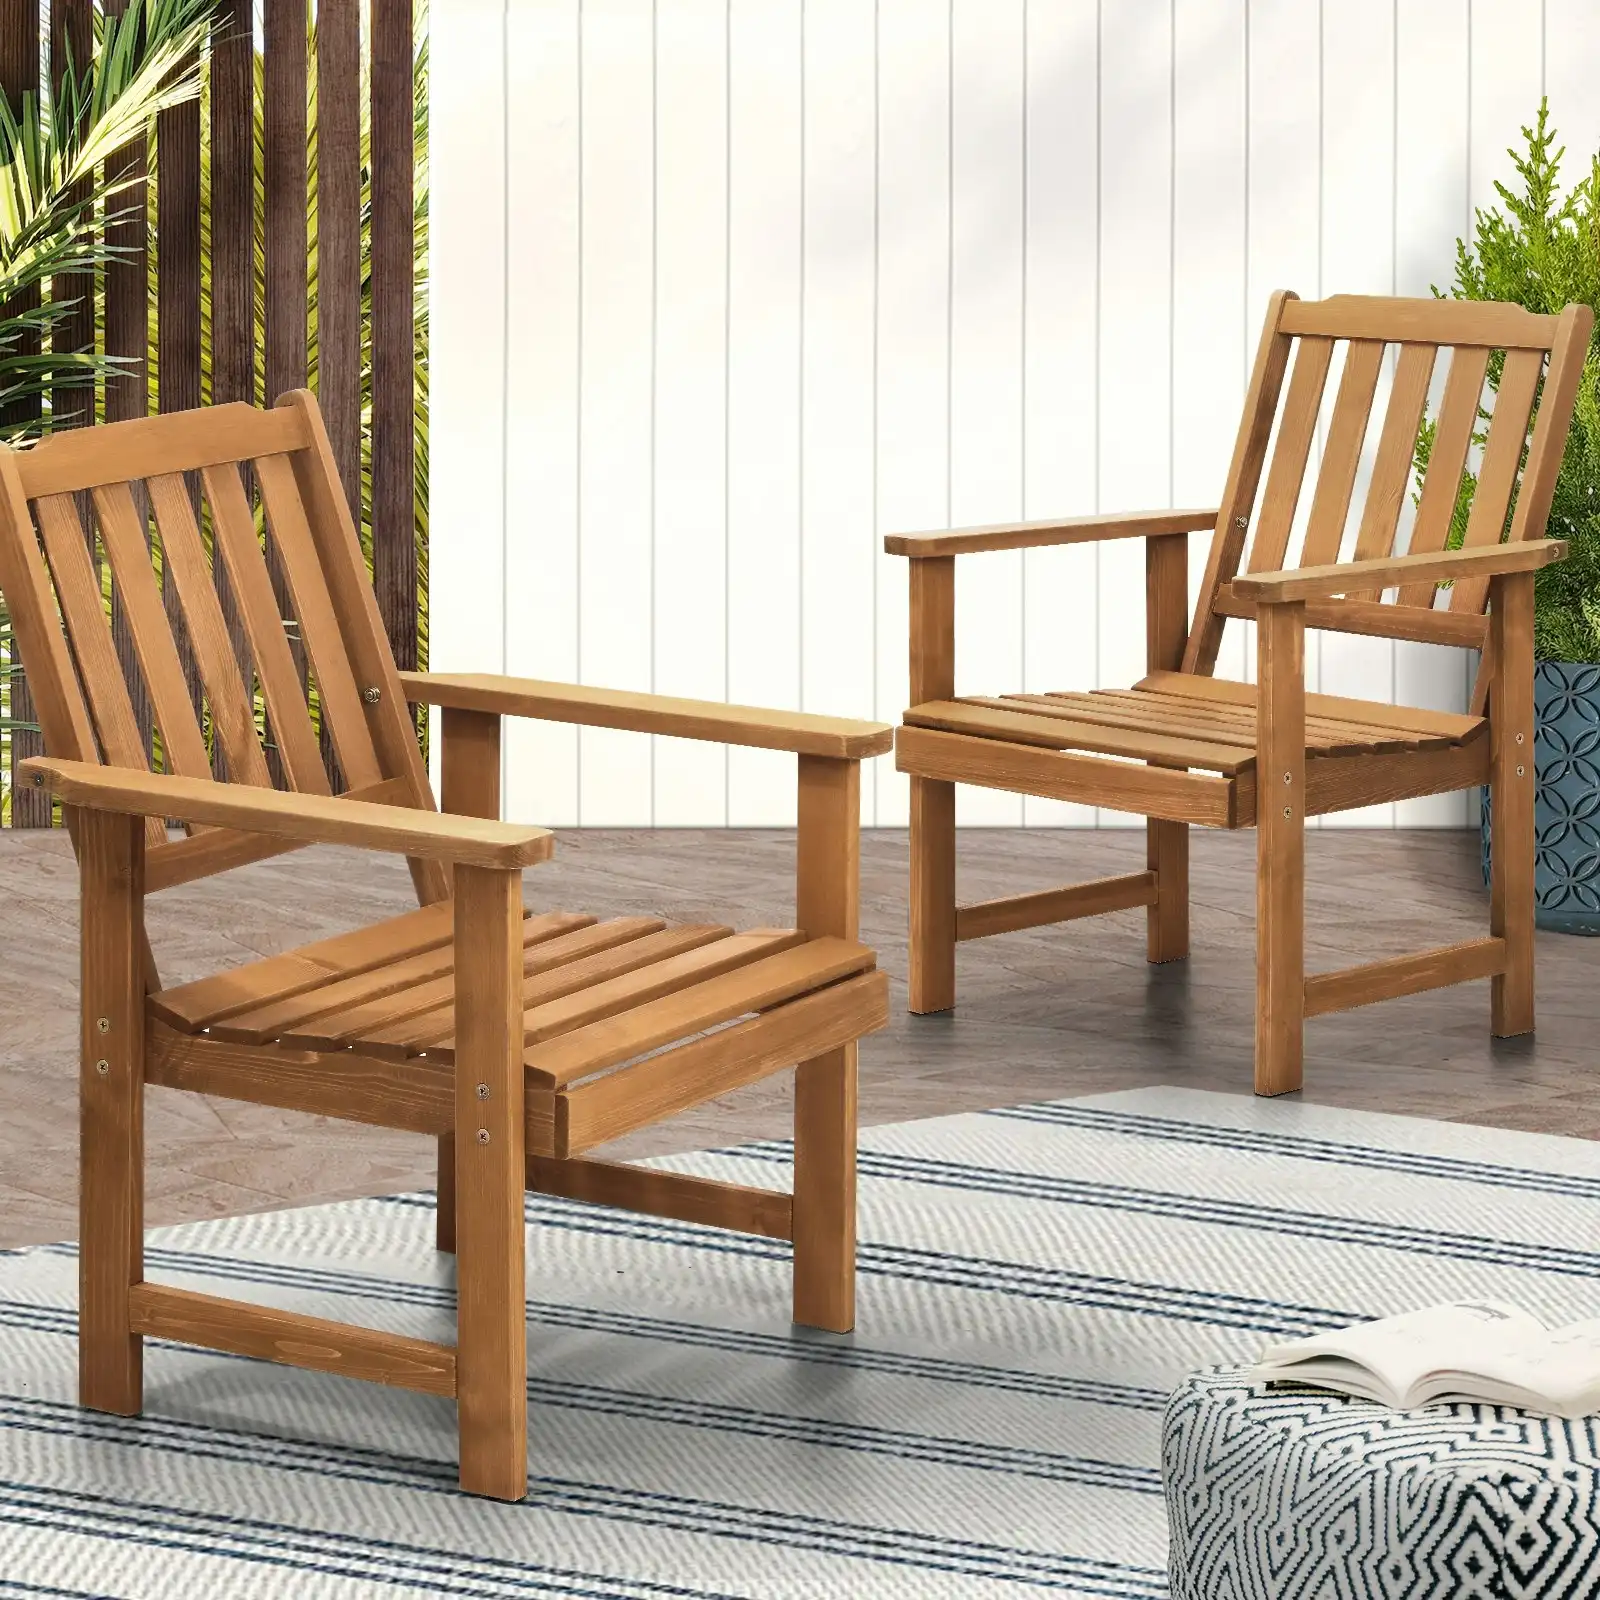 Livsip Outdoor Armchair Wooden Patio Furniture Set of 2 Chairs Set Garden Seat